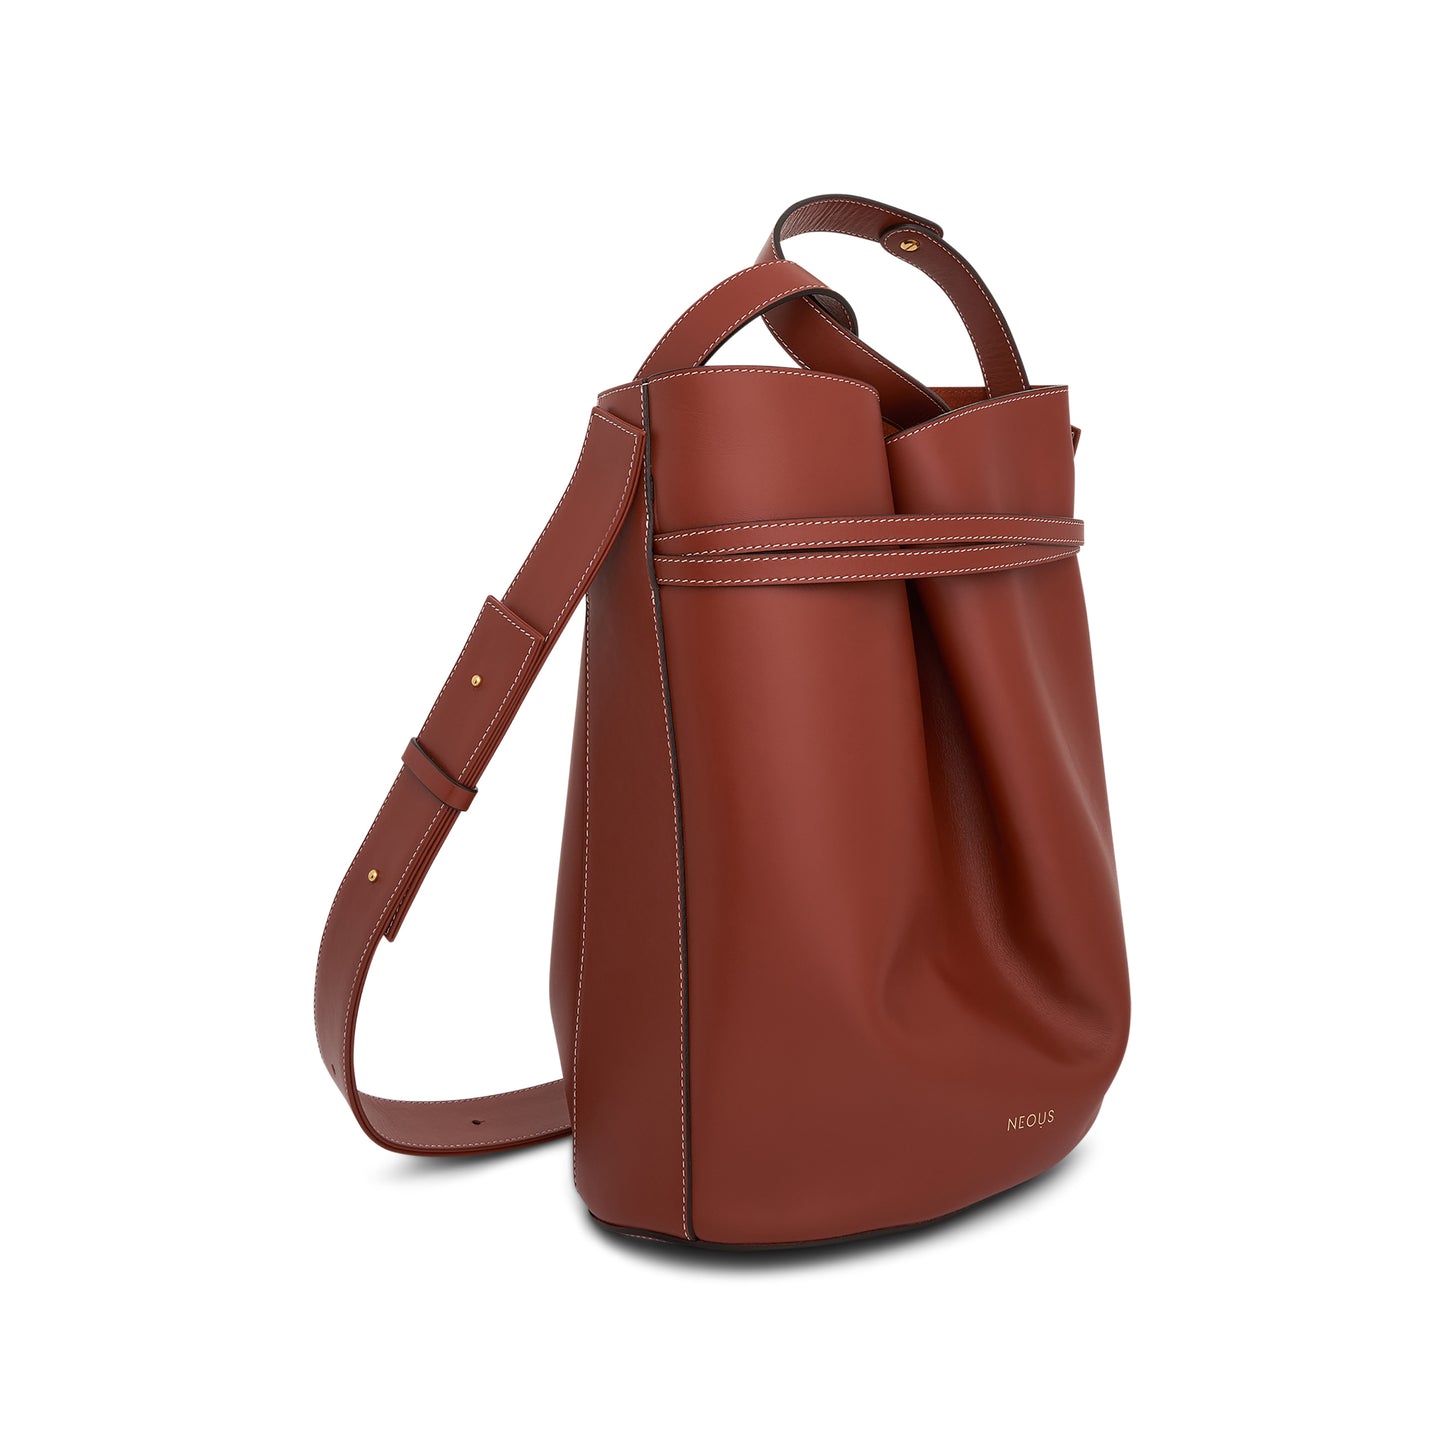 Sigma Bucket Bag in Cognac